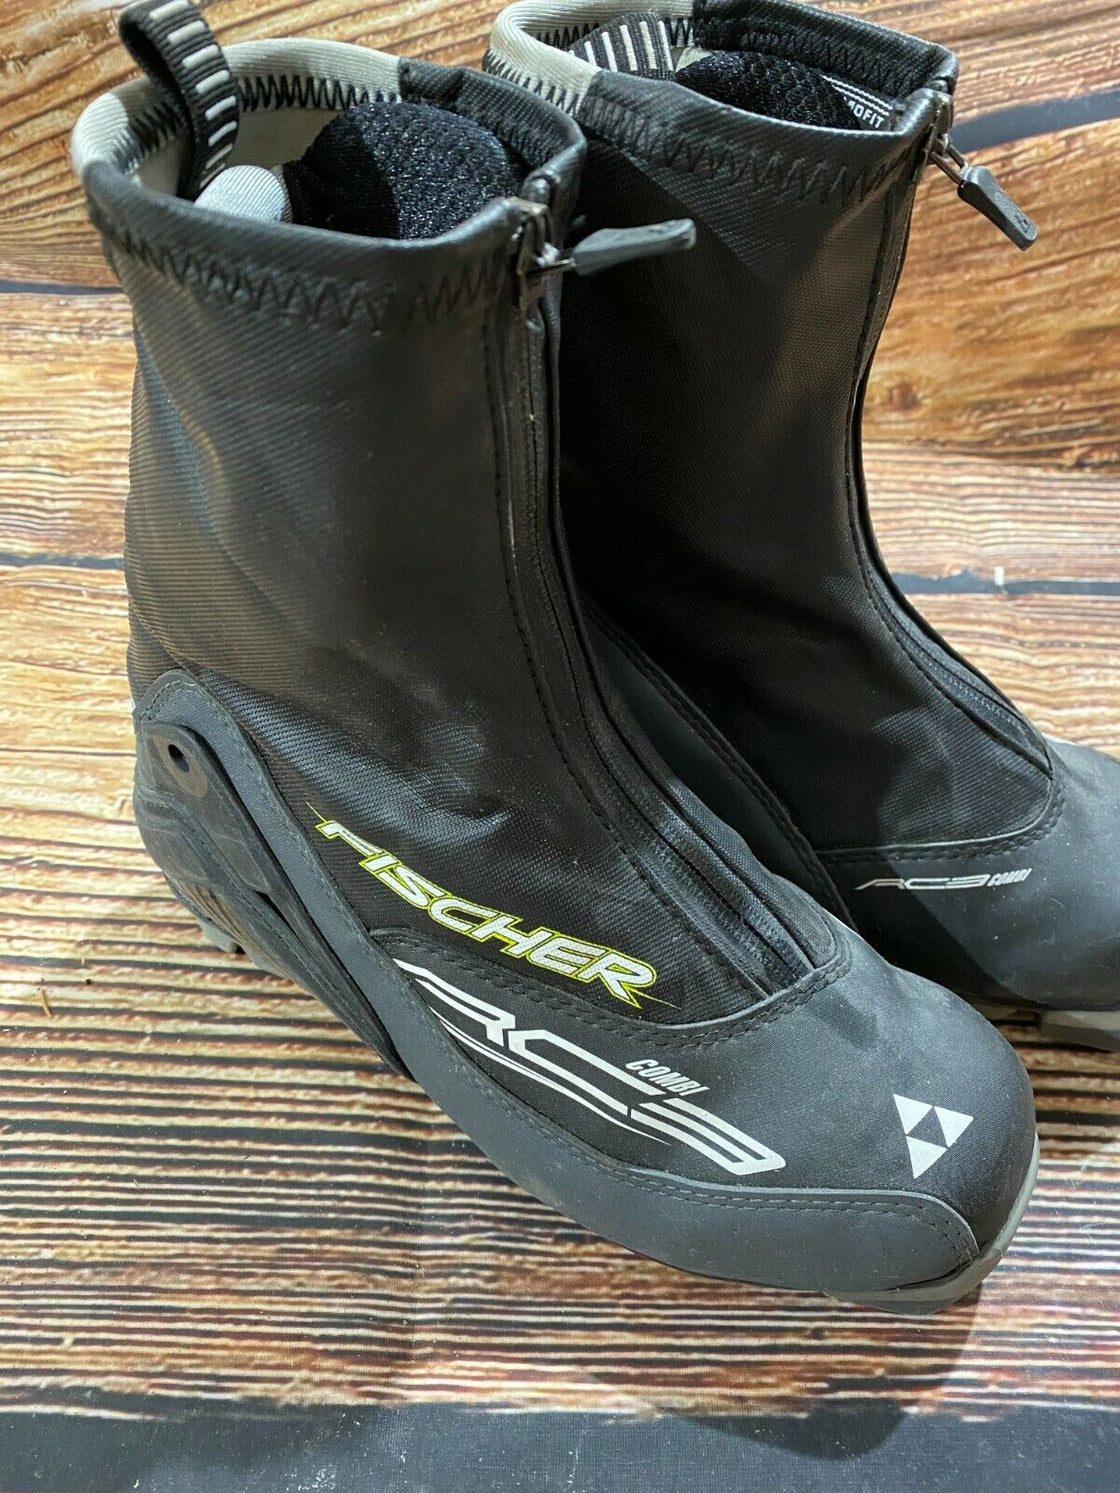 Fischer RC3 Classic Cross Country Ski Boots Combi Size EU36 US4.5 NNN